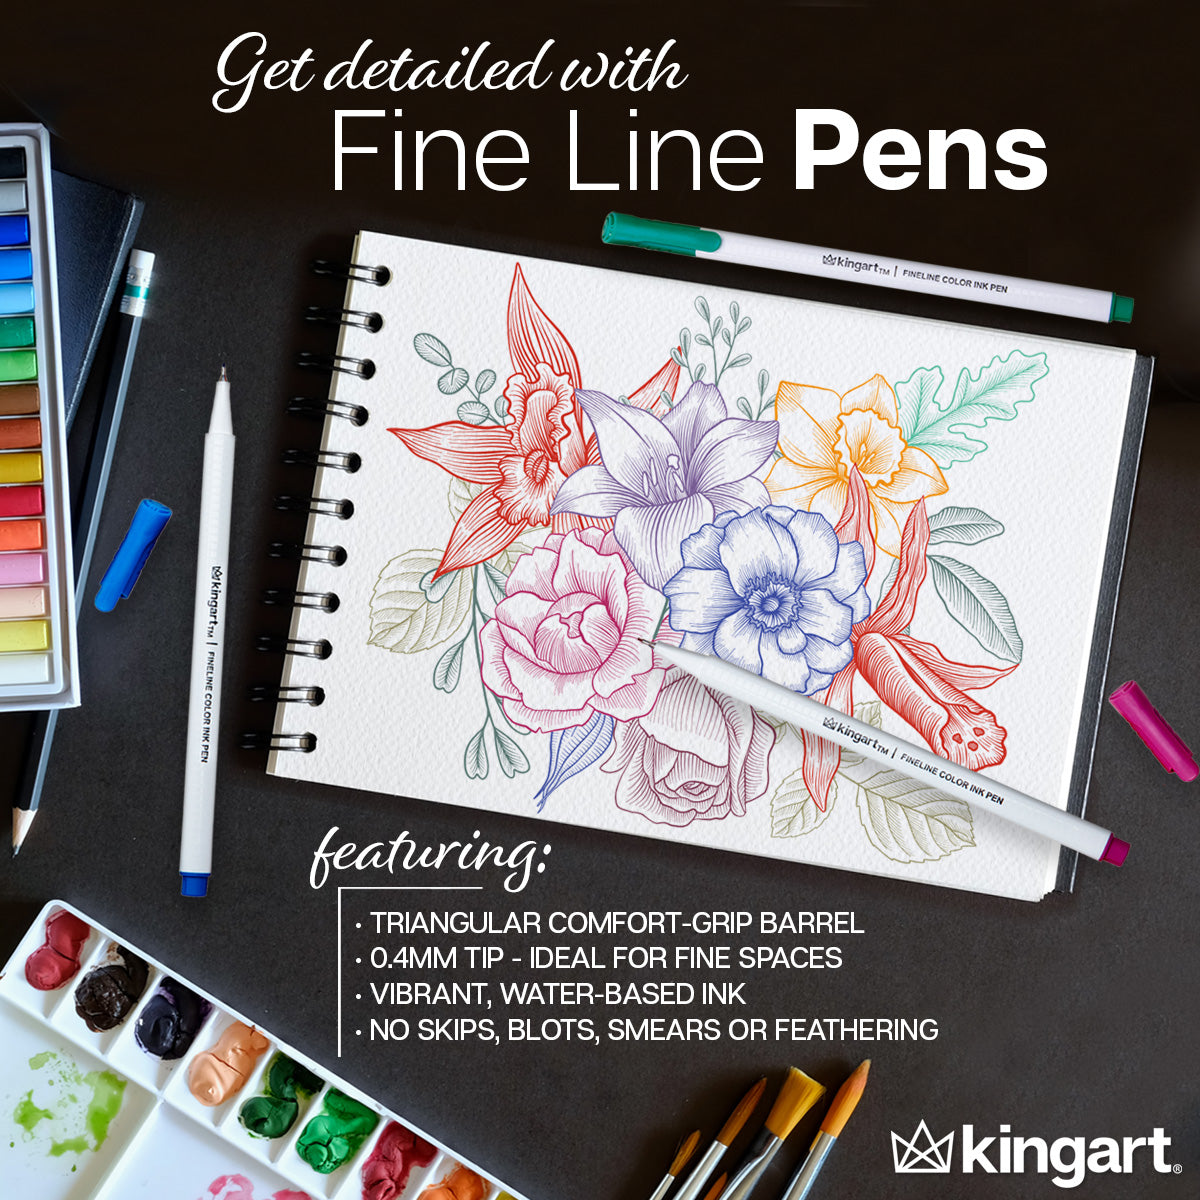 KINGART® Fine Line Color Ink Pens, Set of 48 Unique Colors, Tip Size 0.4 mm